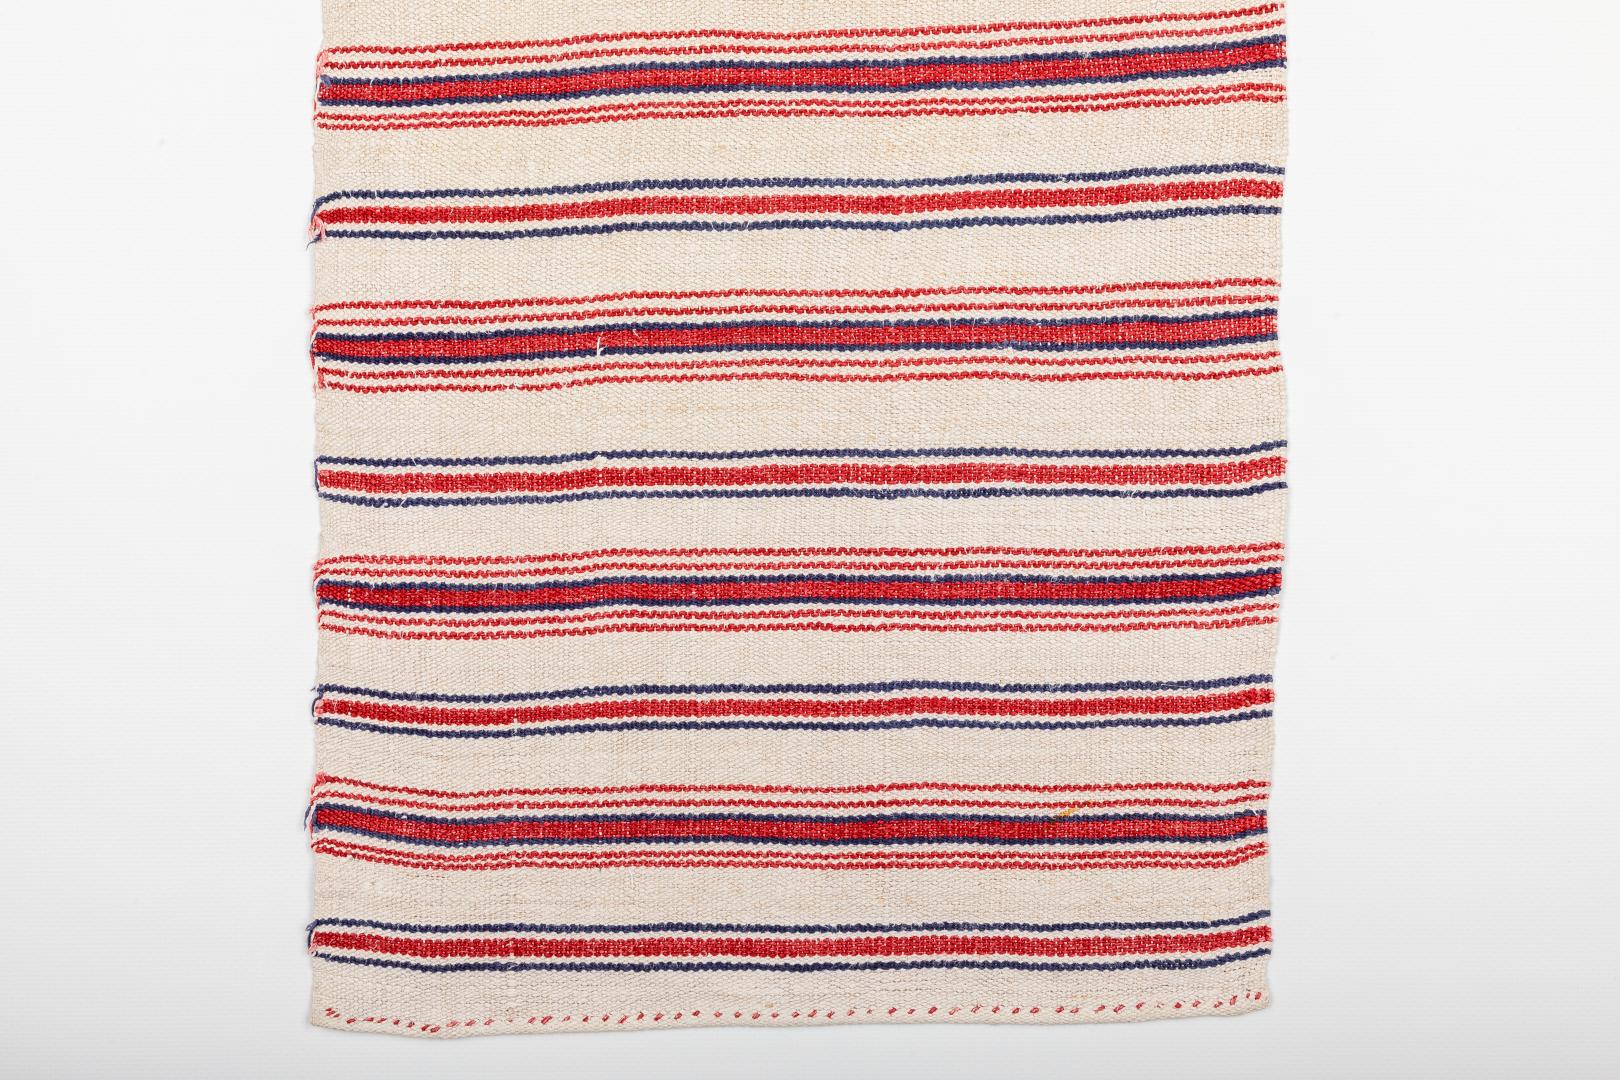 Woven rushnyk (towel)